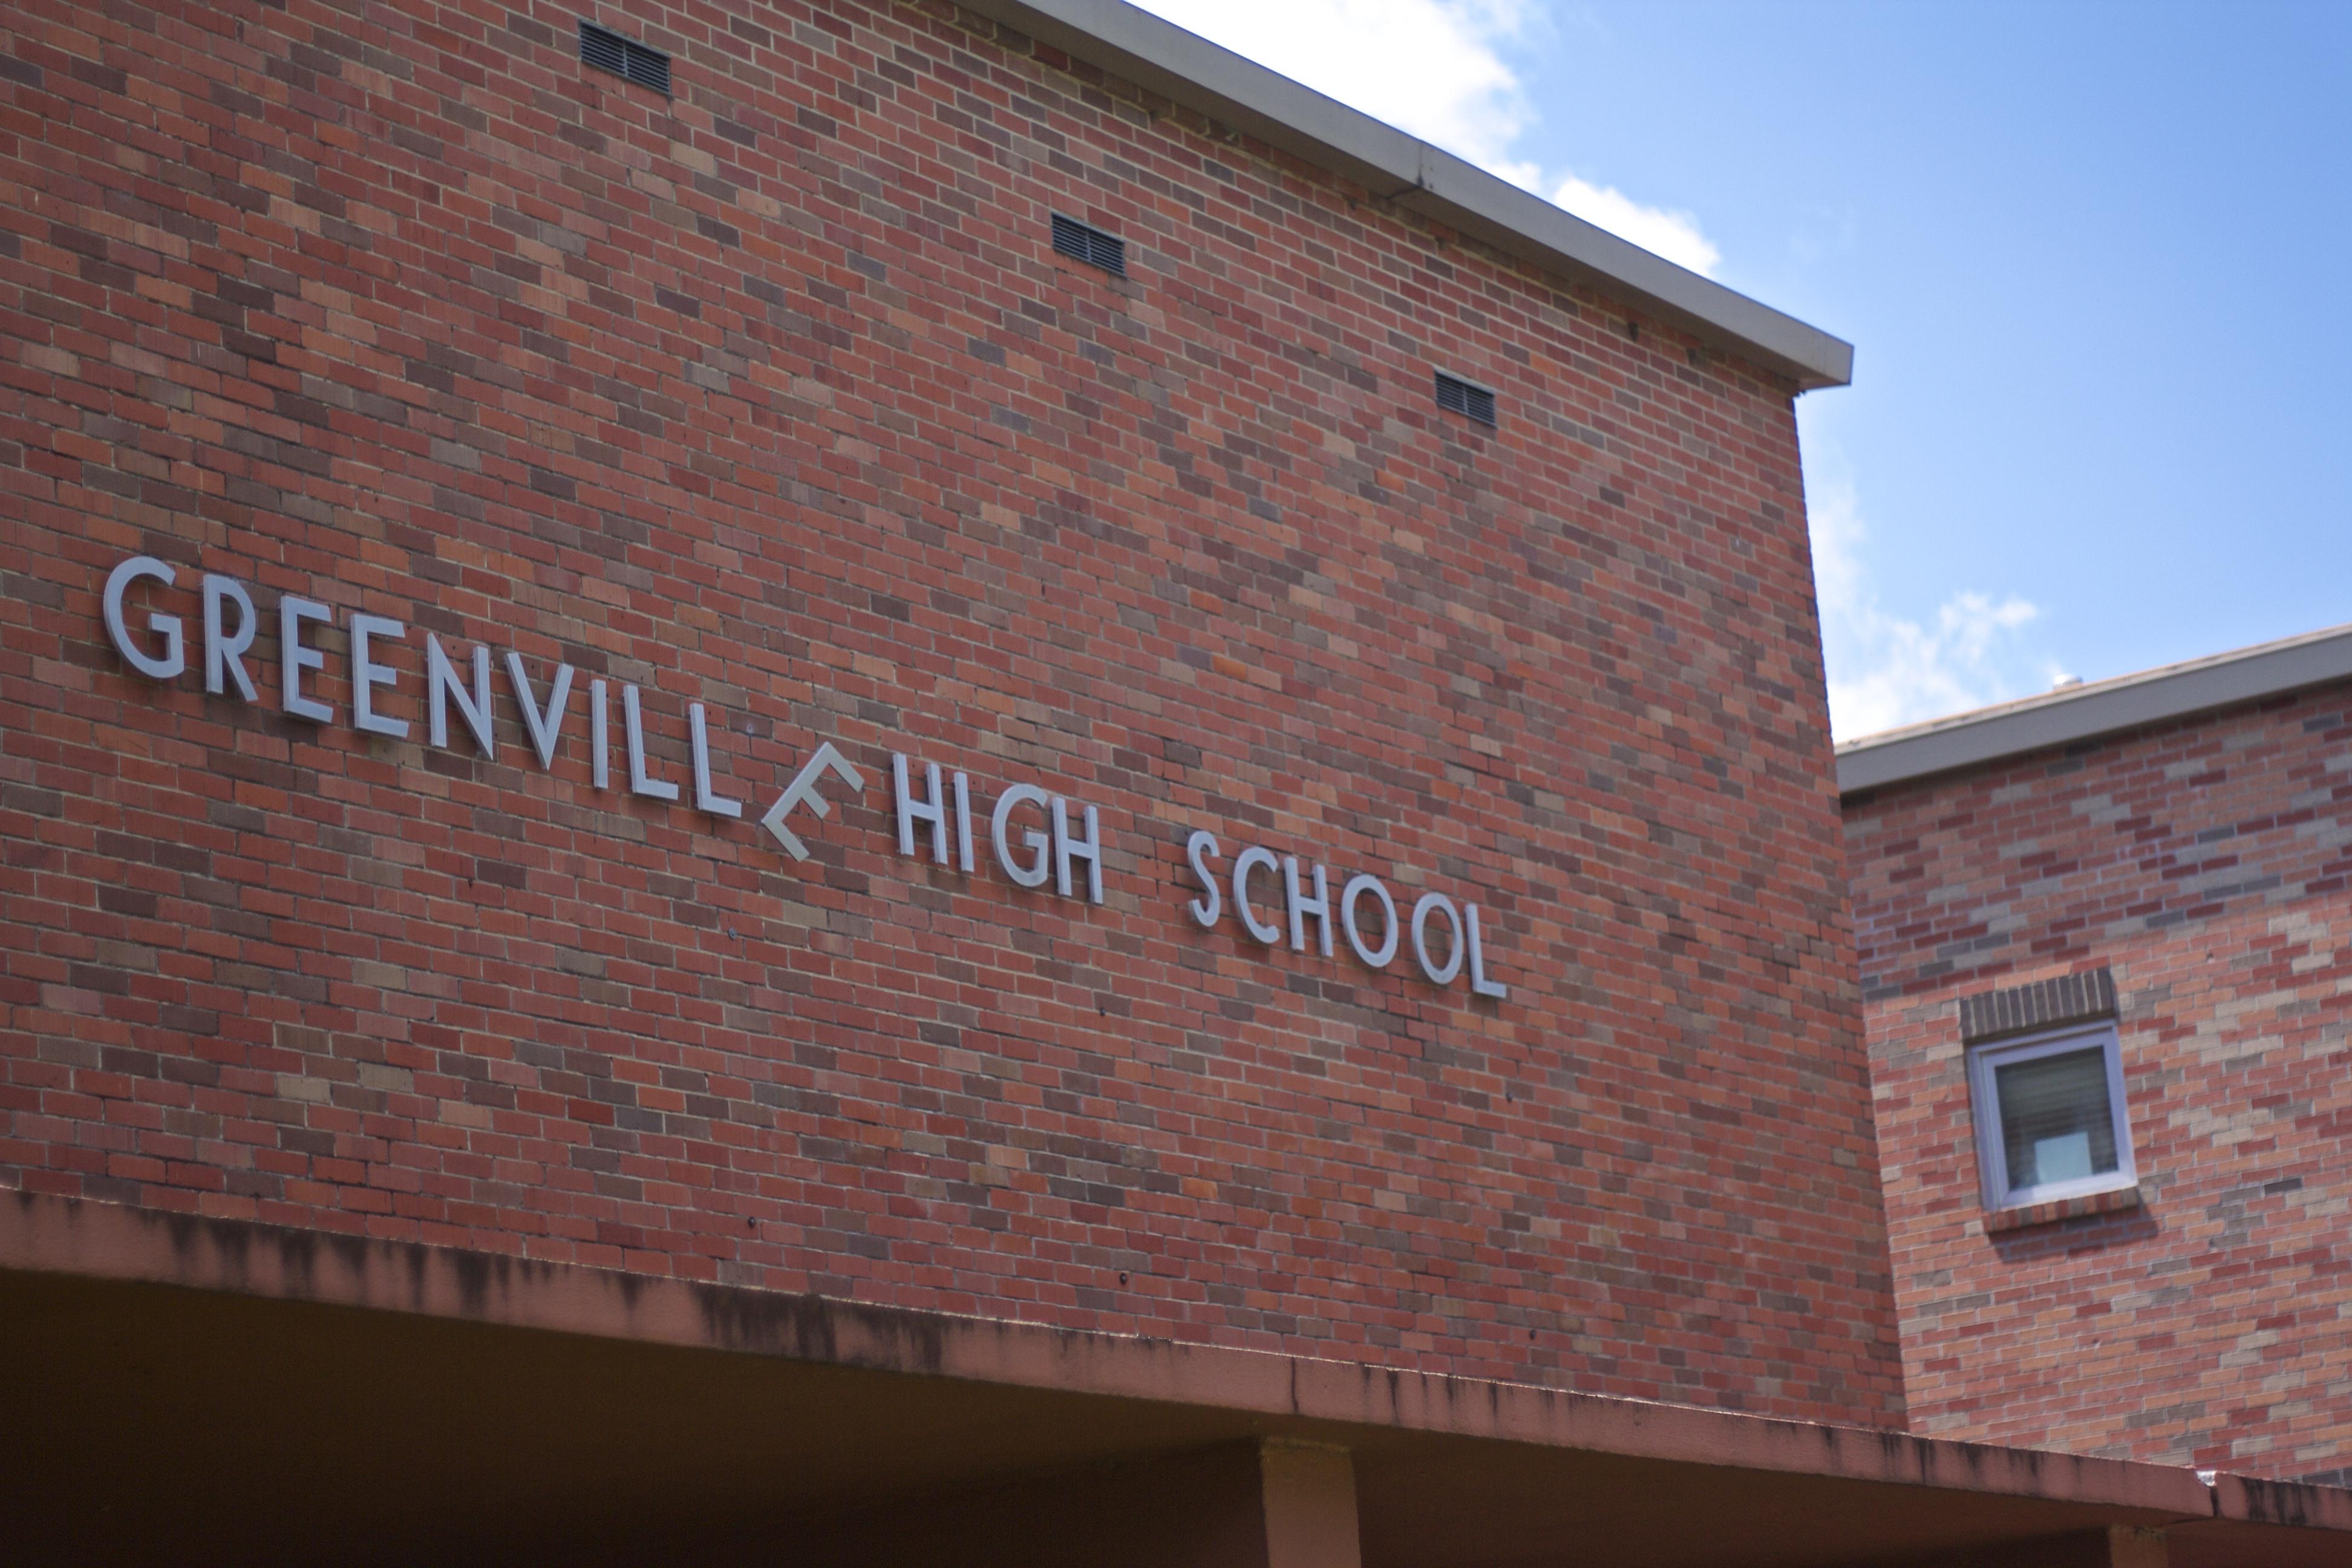 Greenville High School